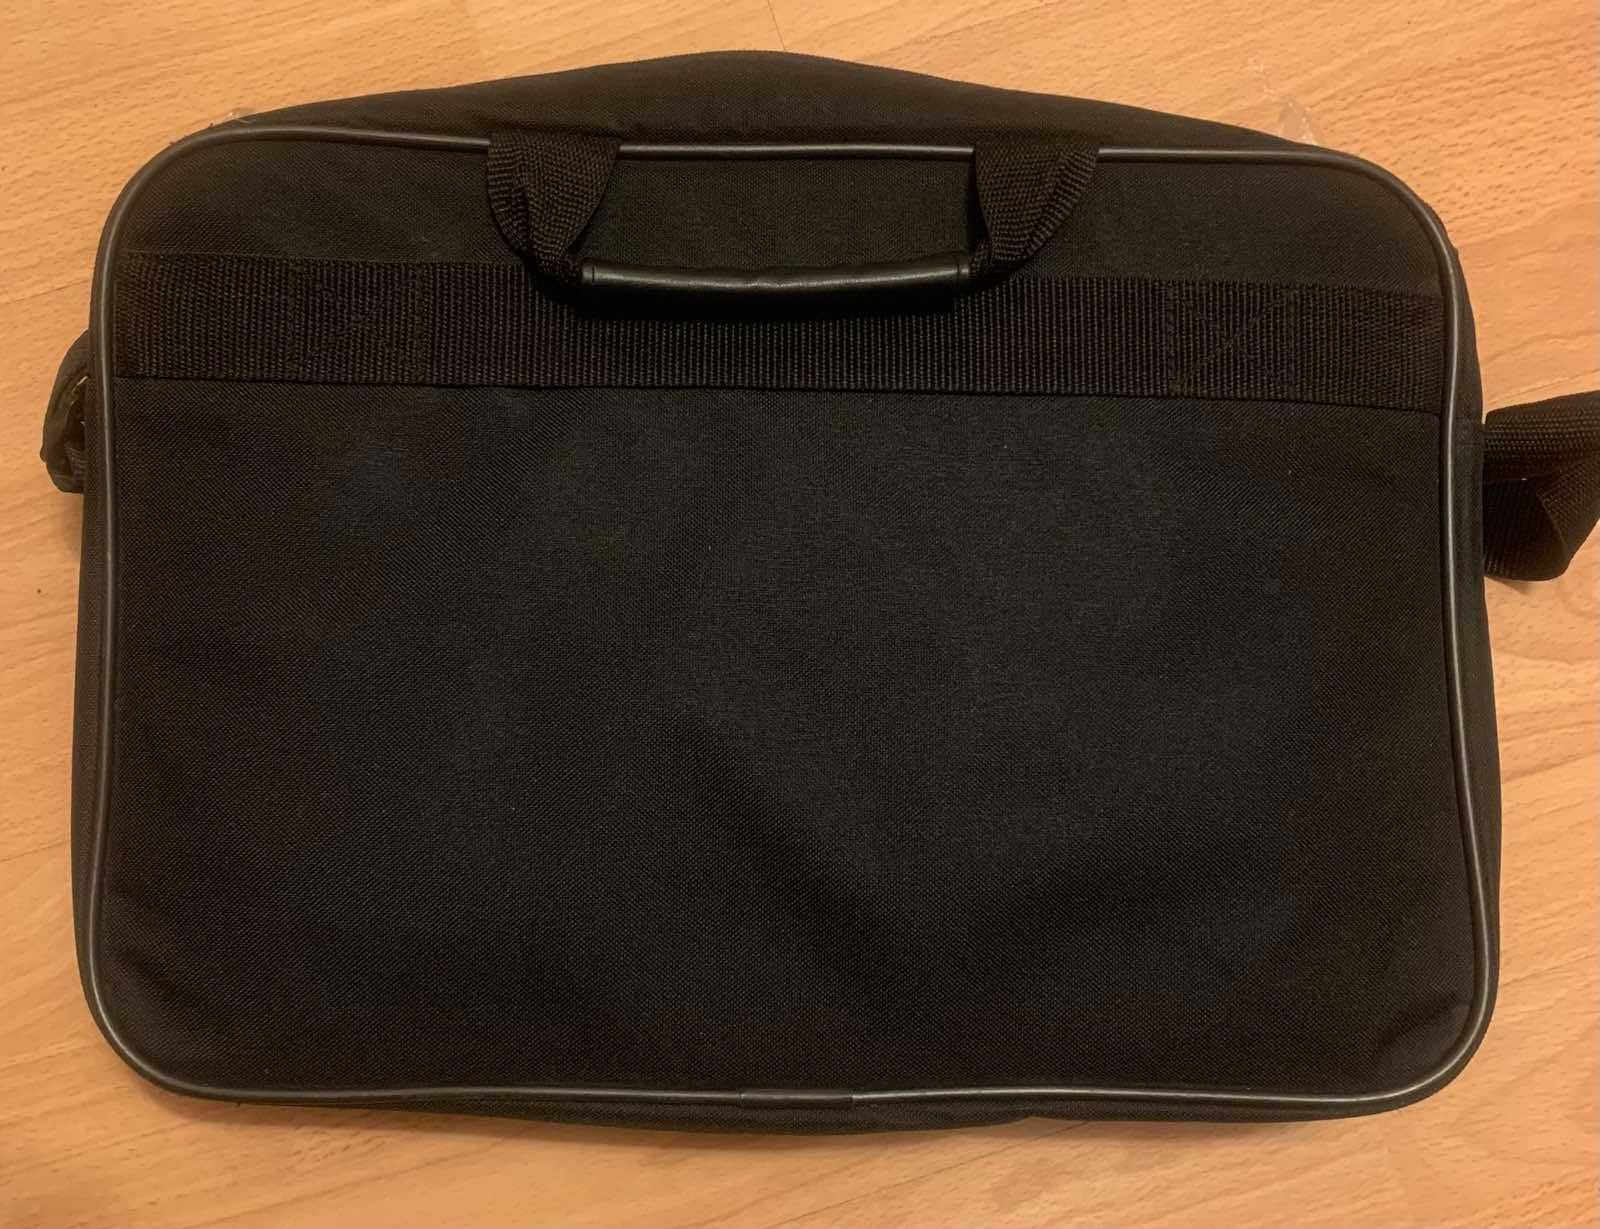 Oригинална HP чанта за лаптоп, размери 42/30/8 см.,  50 лв